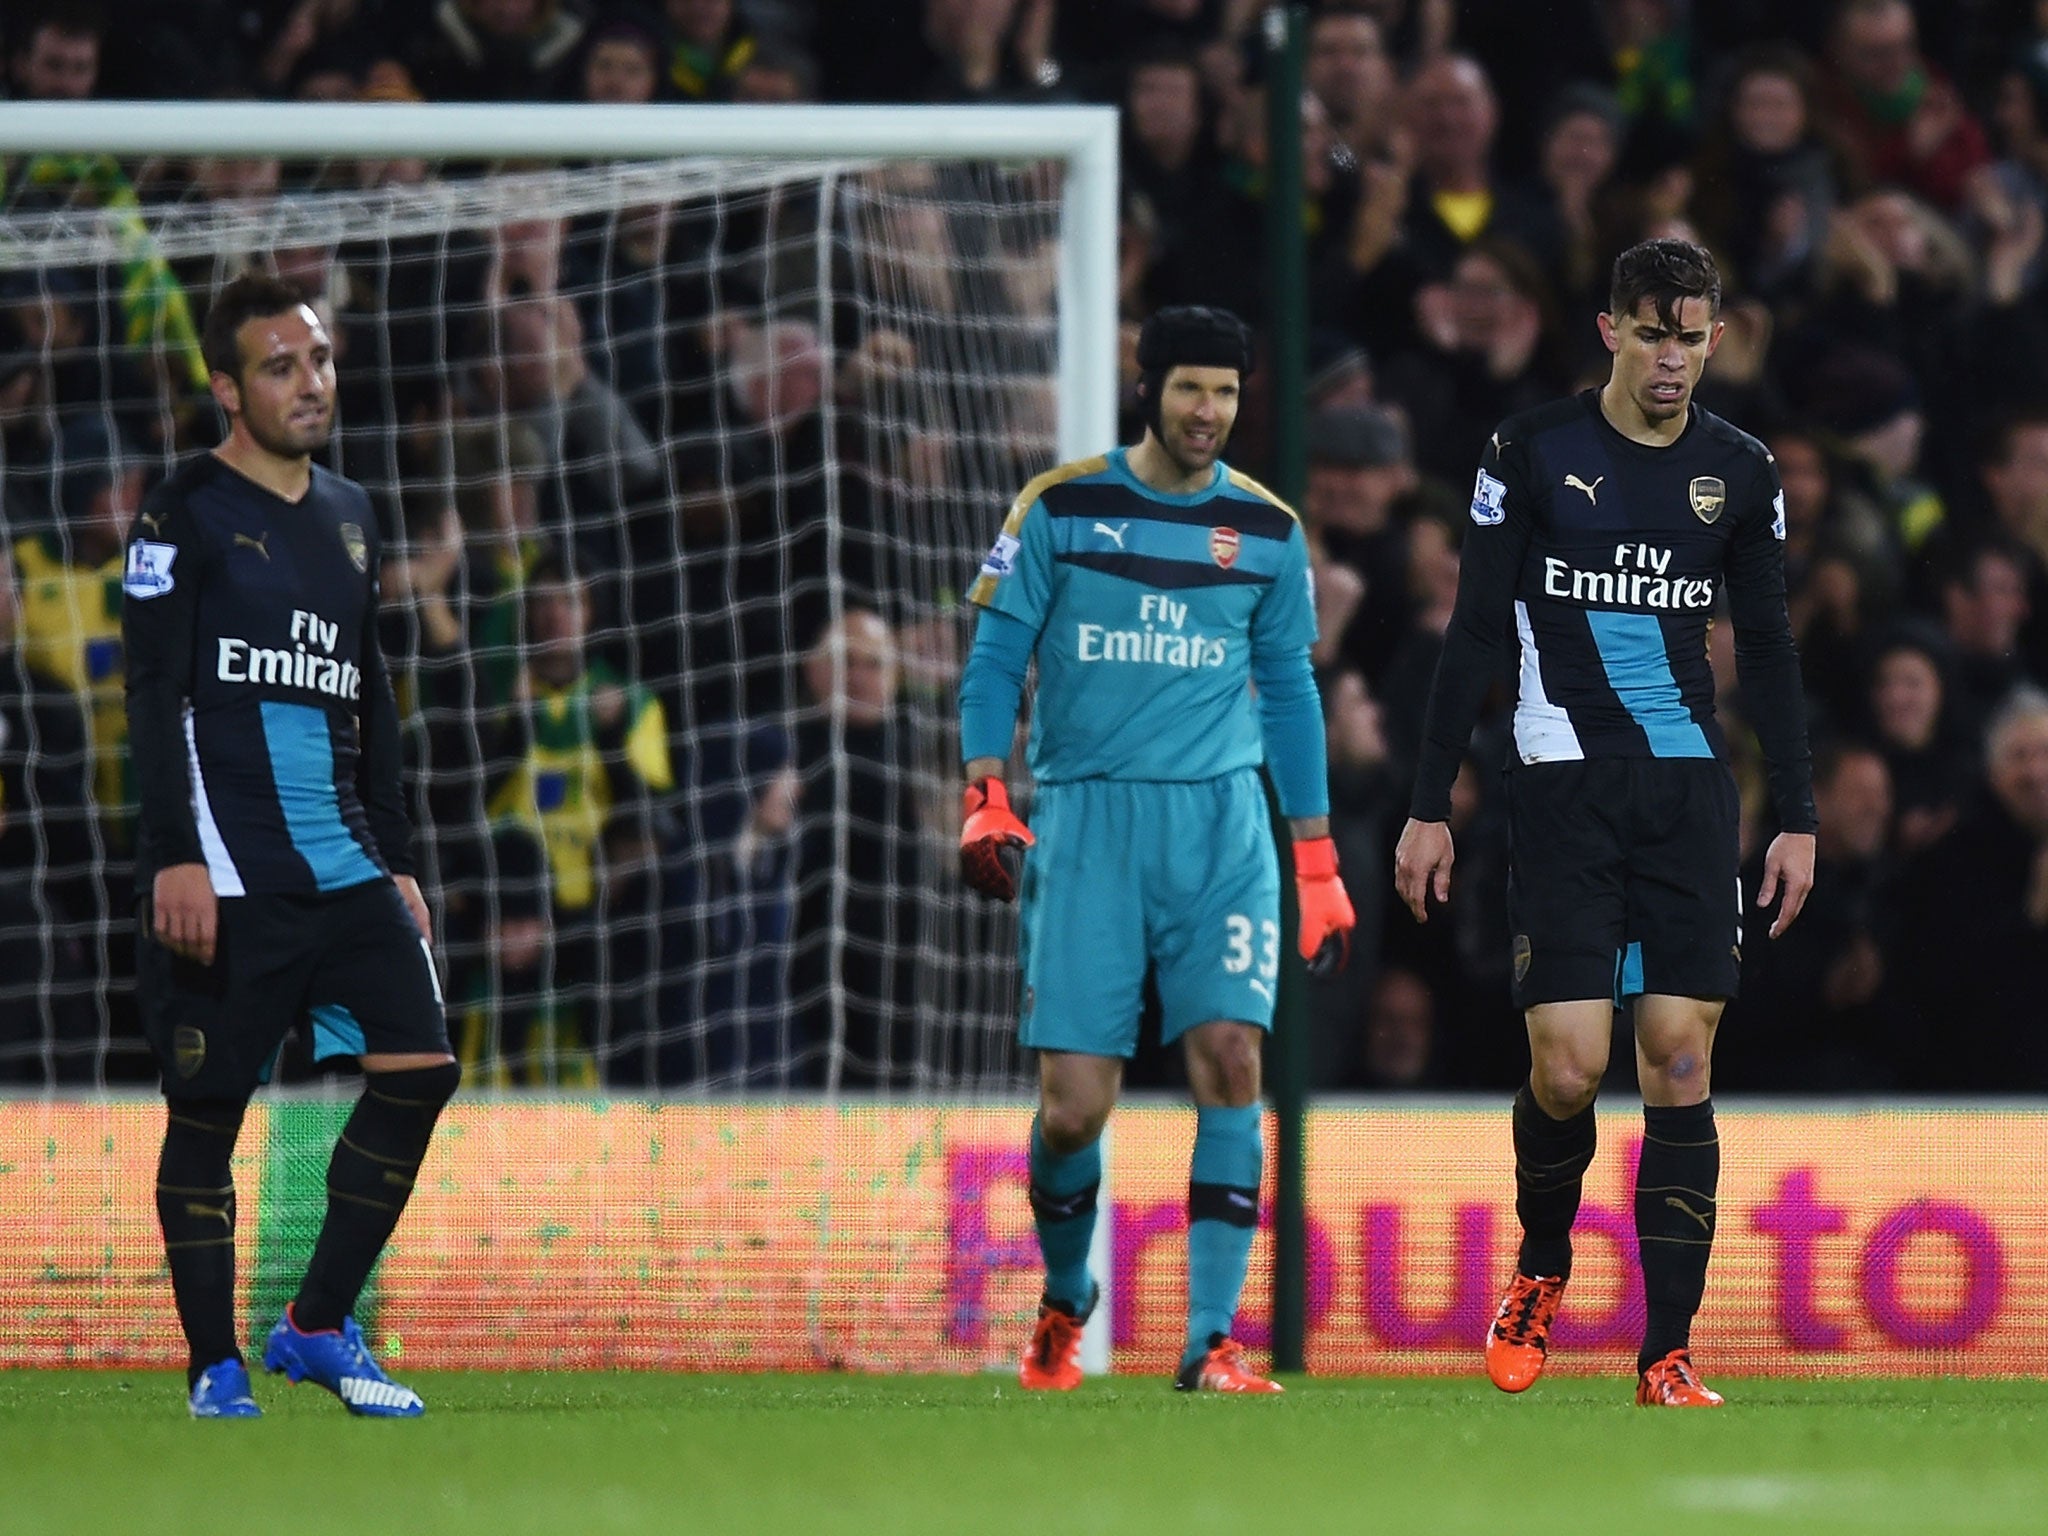 Santi Cazorla, Petr Cech and Gabriel Paulista react to conceding a goal against Norwich